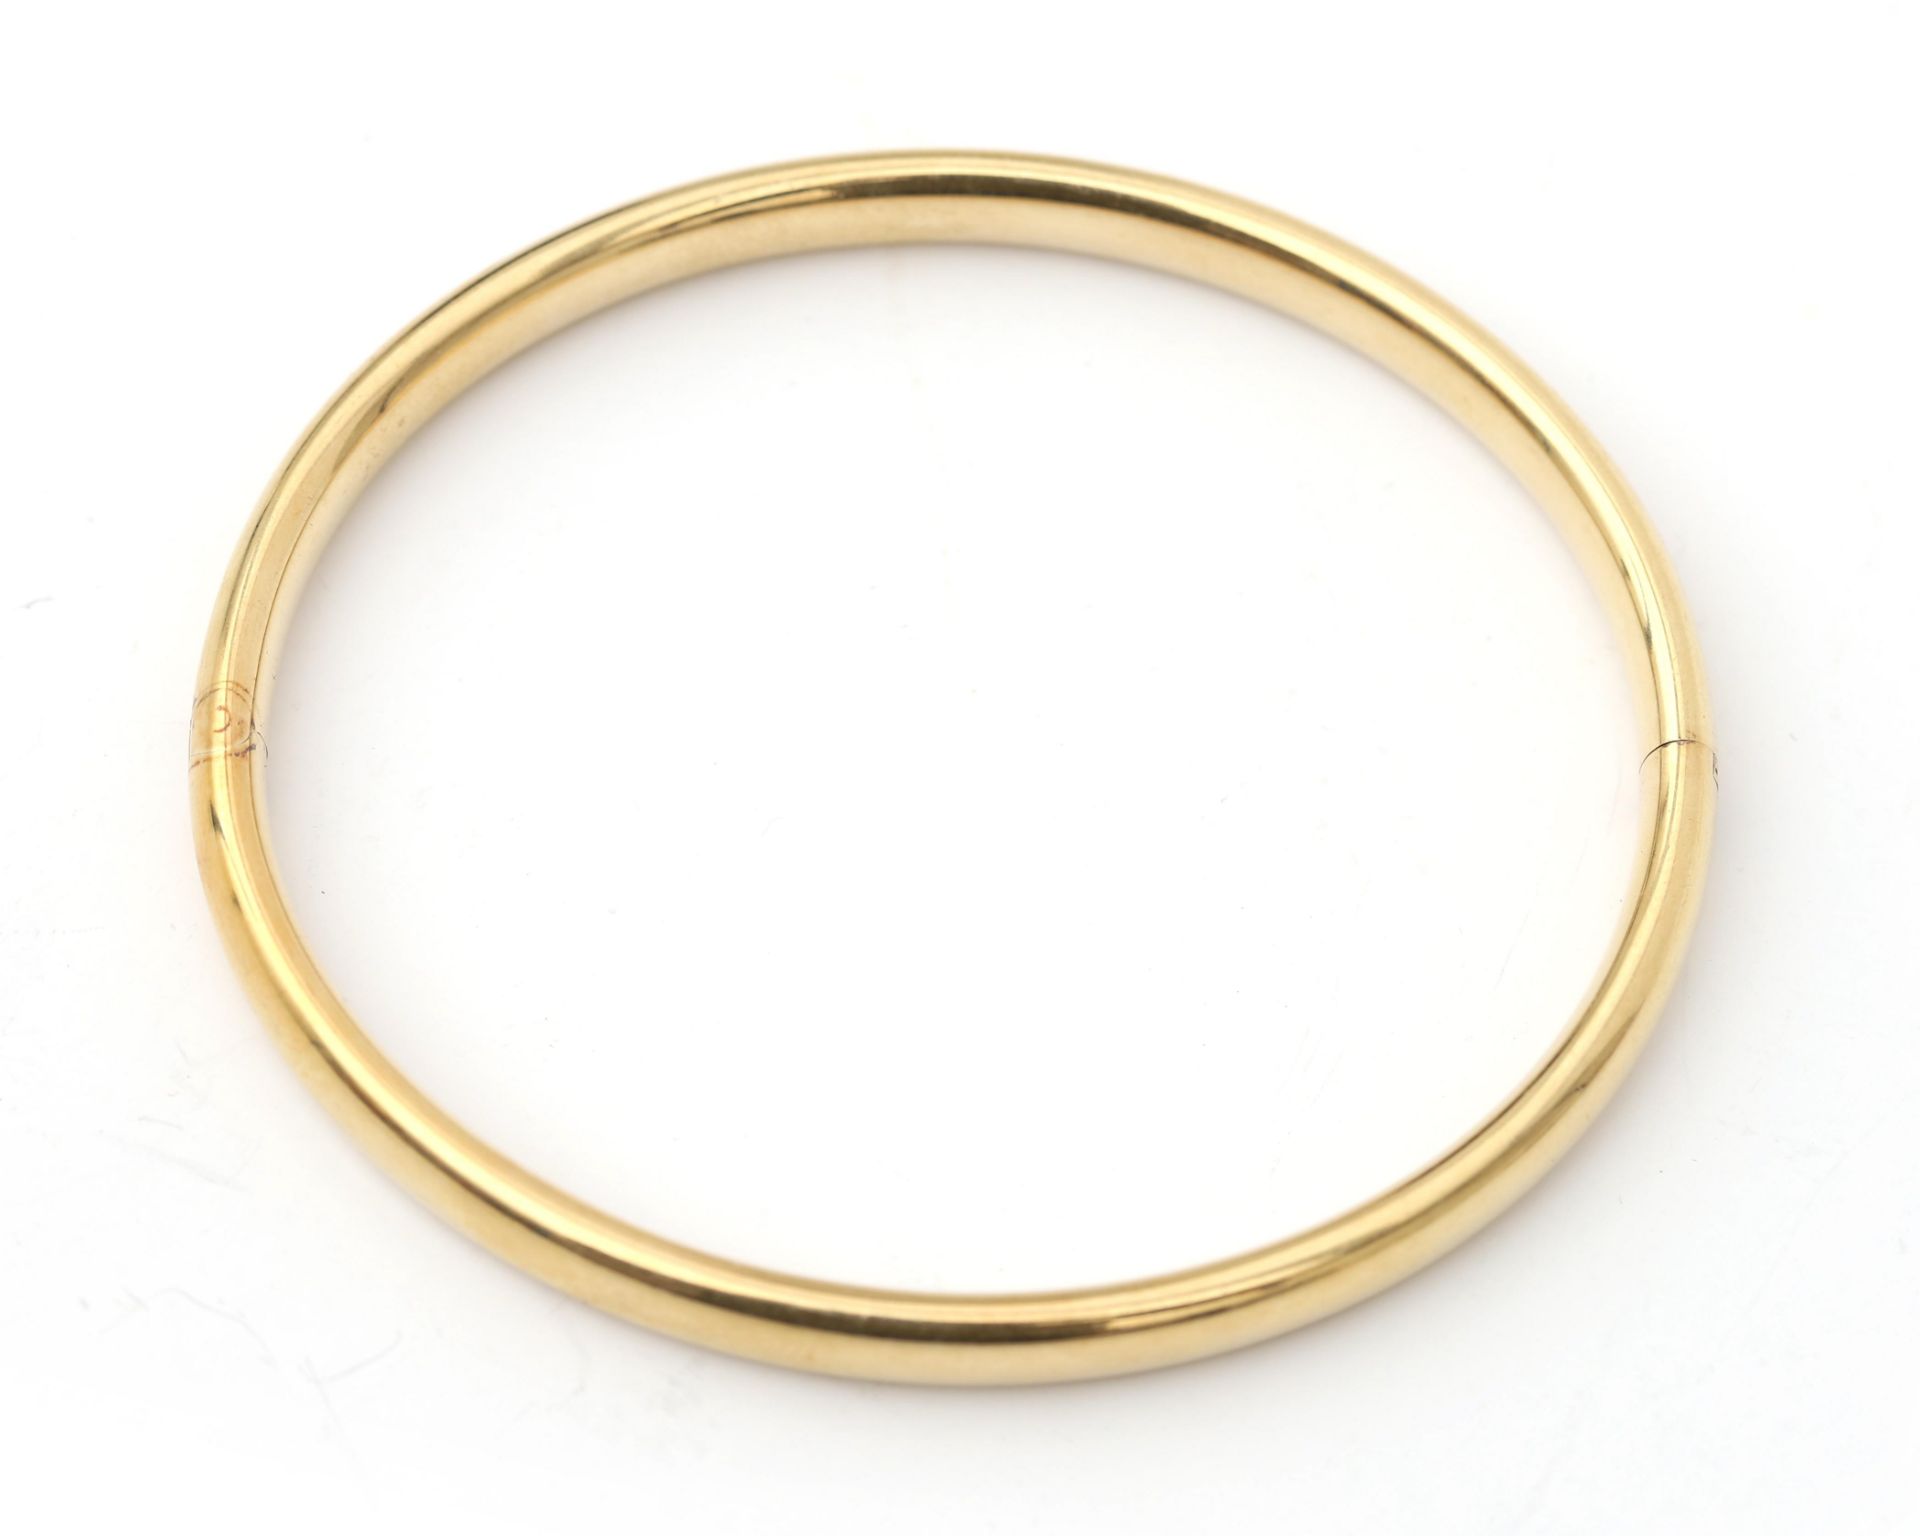 A 14 karat gold bangle - Image 4 of 5